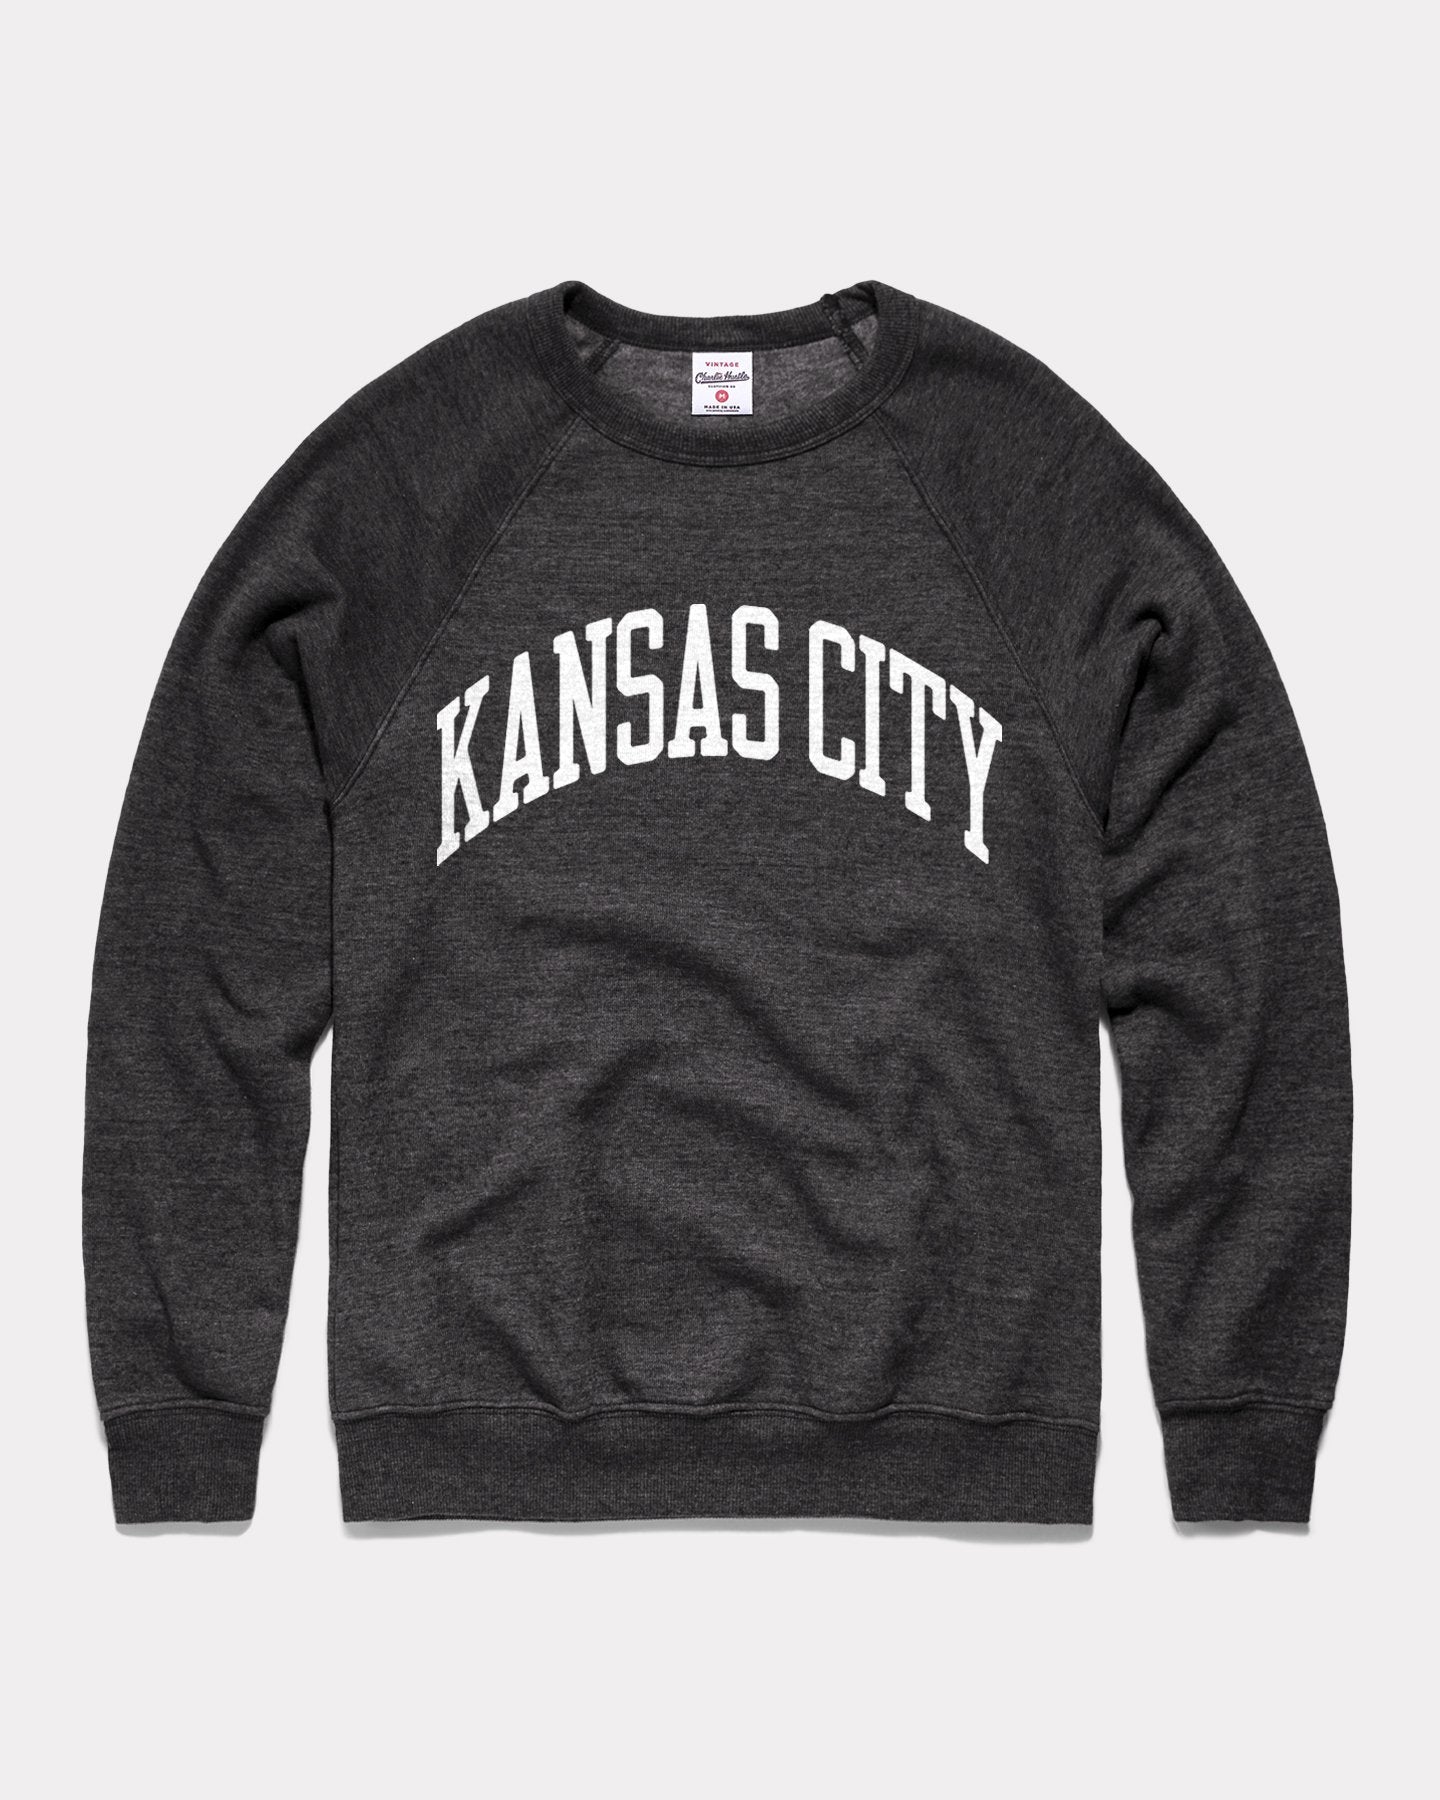 kansas city sweatshirt